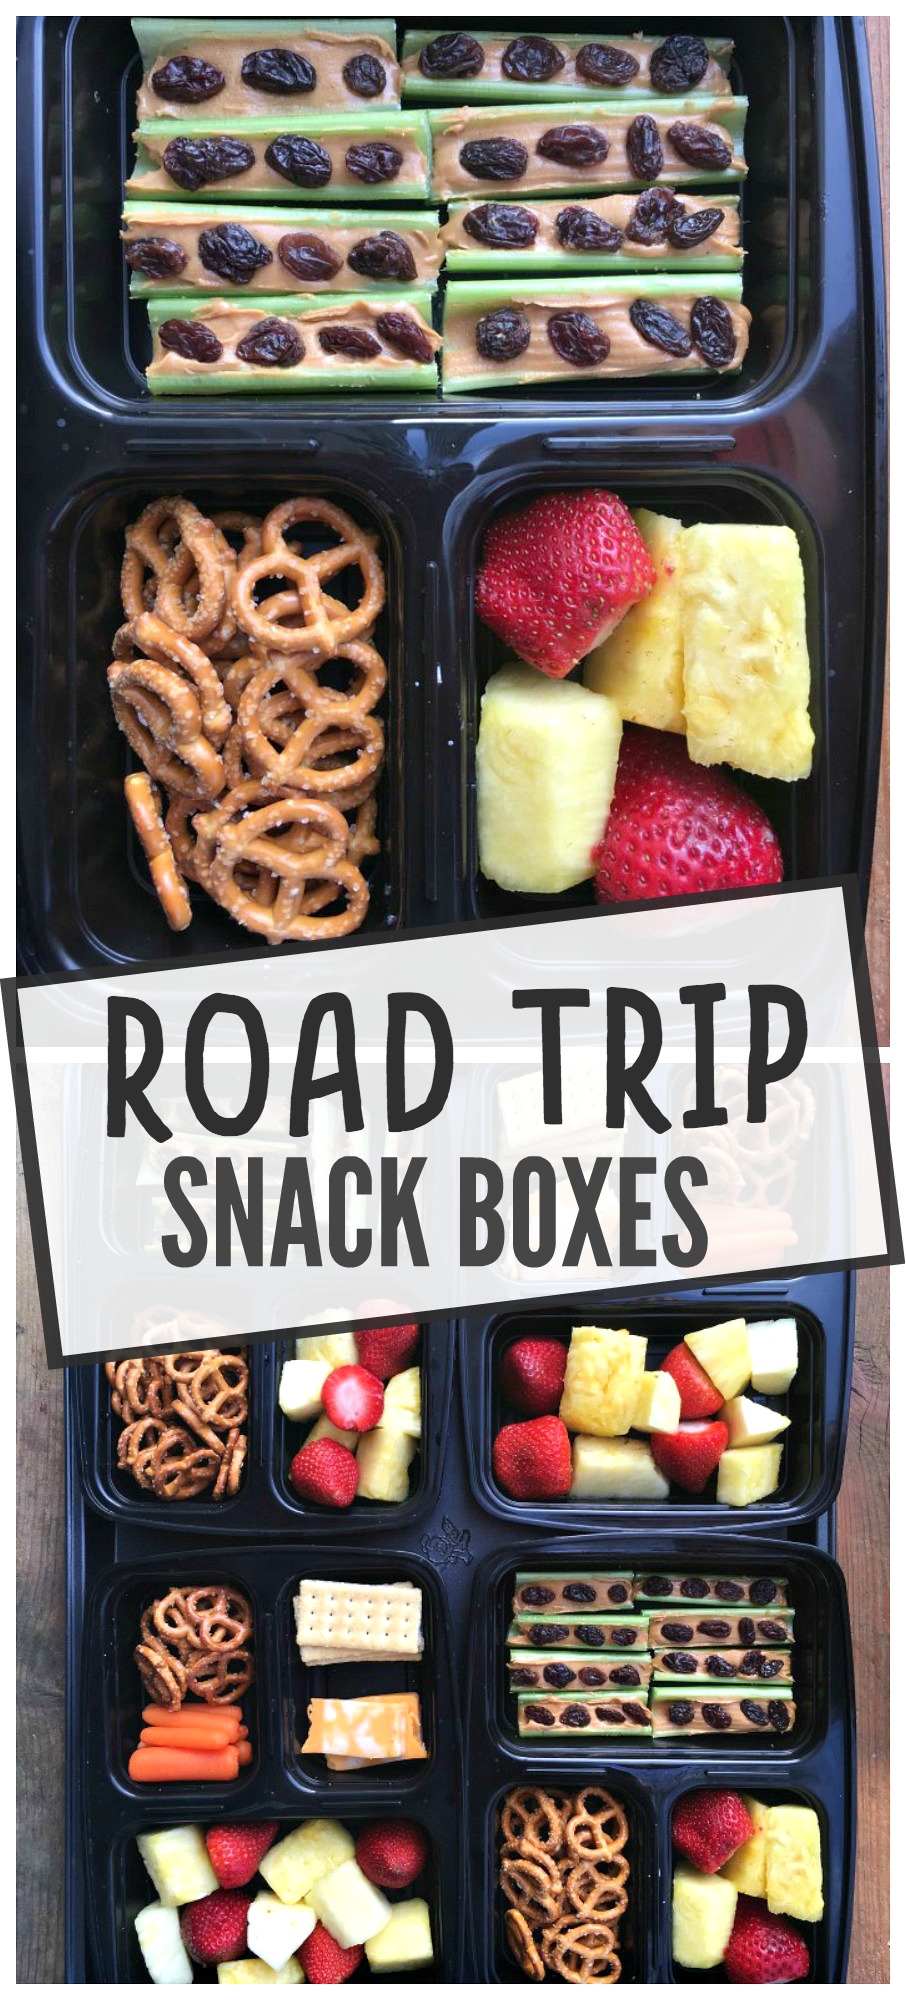 https://makethebestofeverything.com/wp-content/uploads/2017/04/road-trip-snack-boxes.jpg